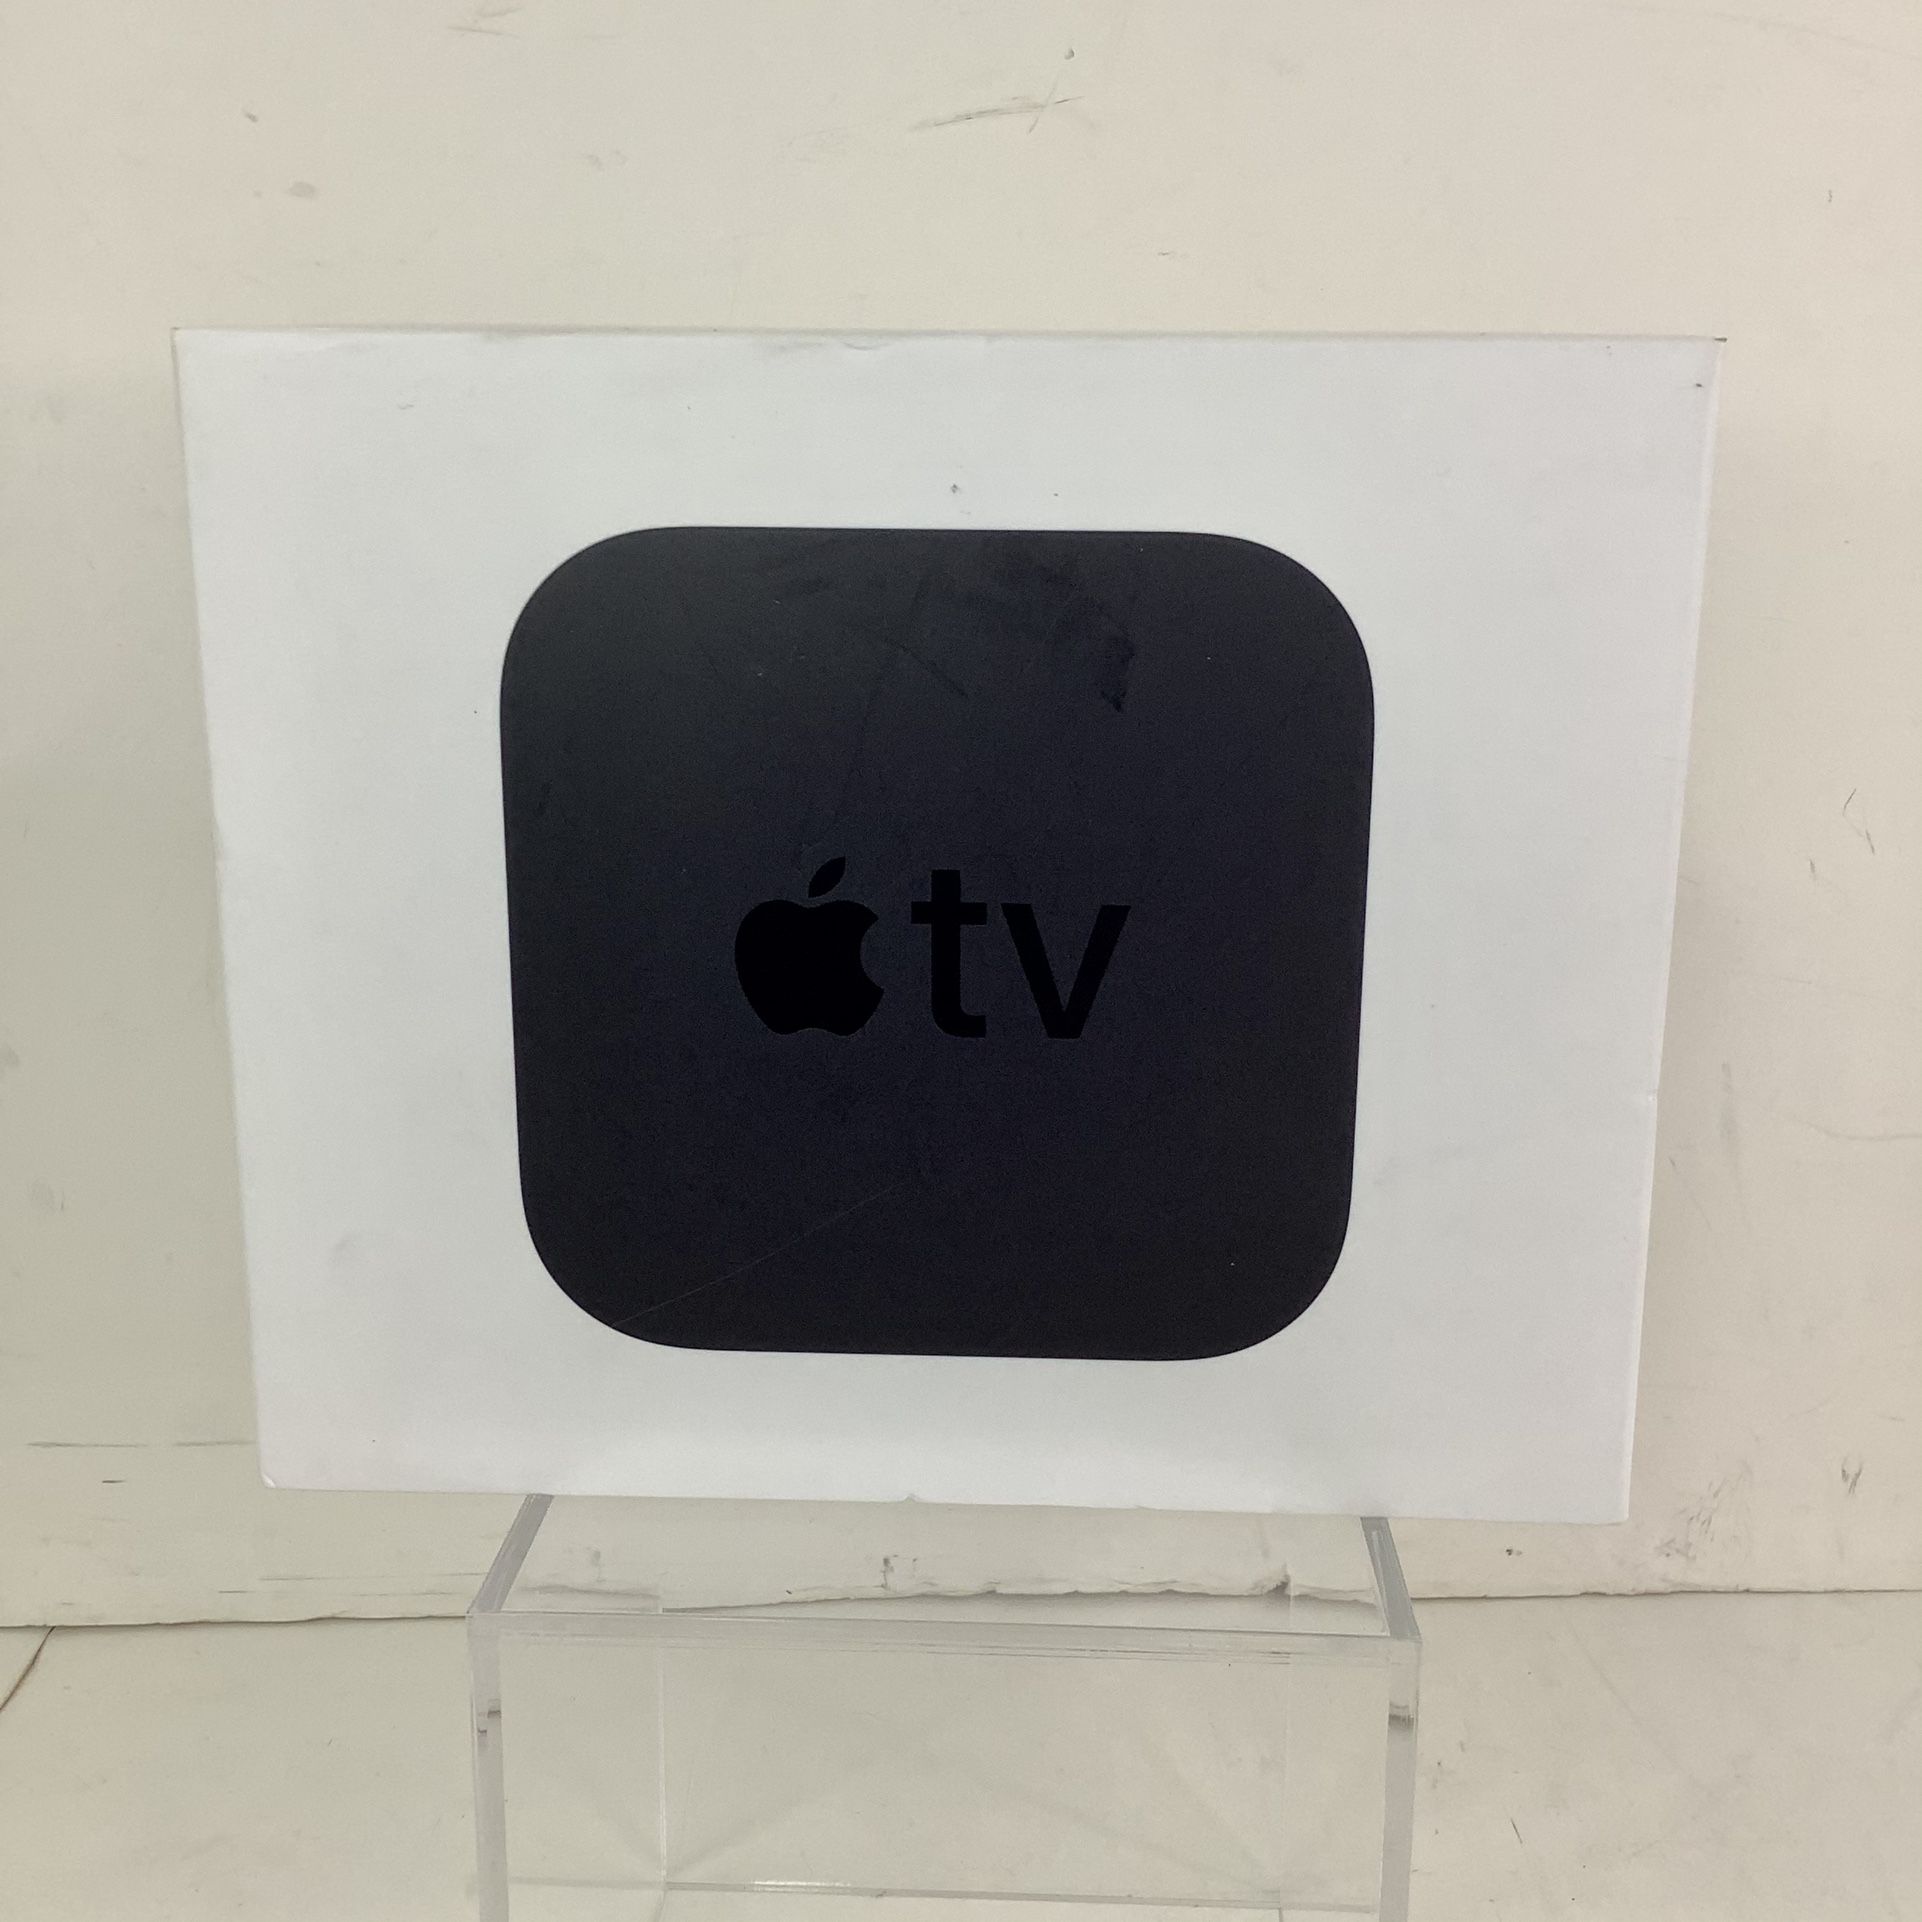 Apple TV HD 32 GB - Black - With Remote And Original Box